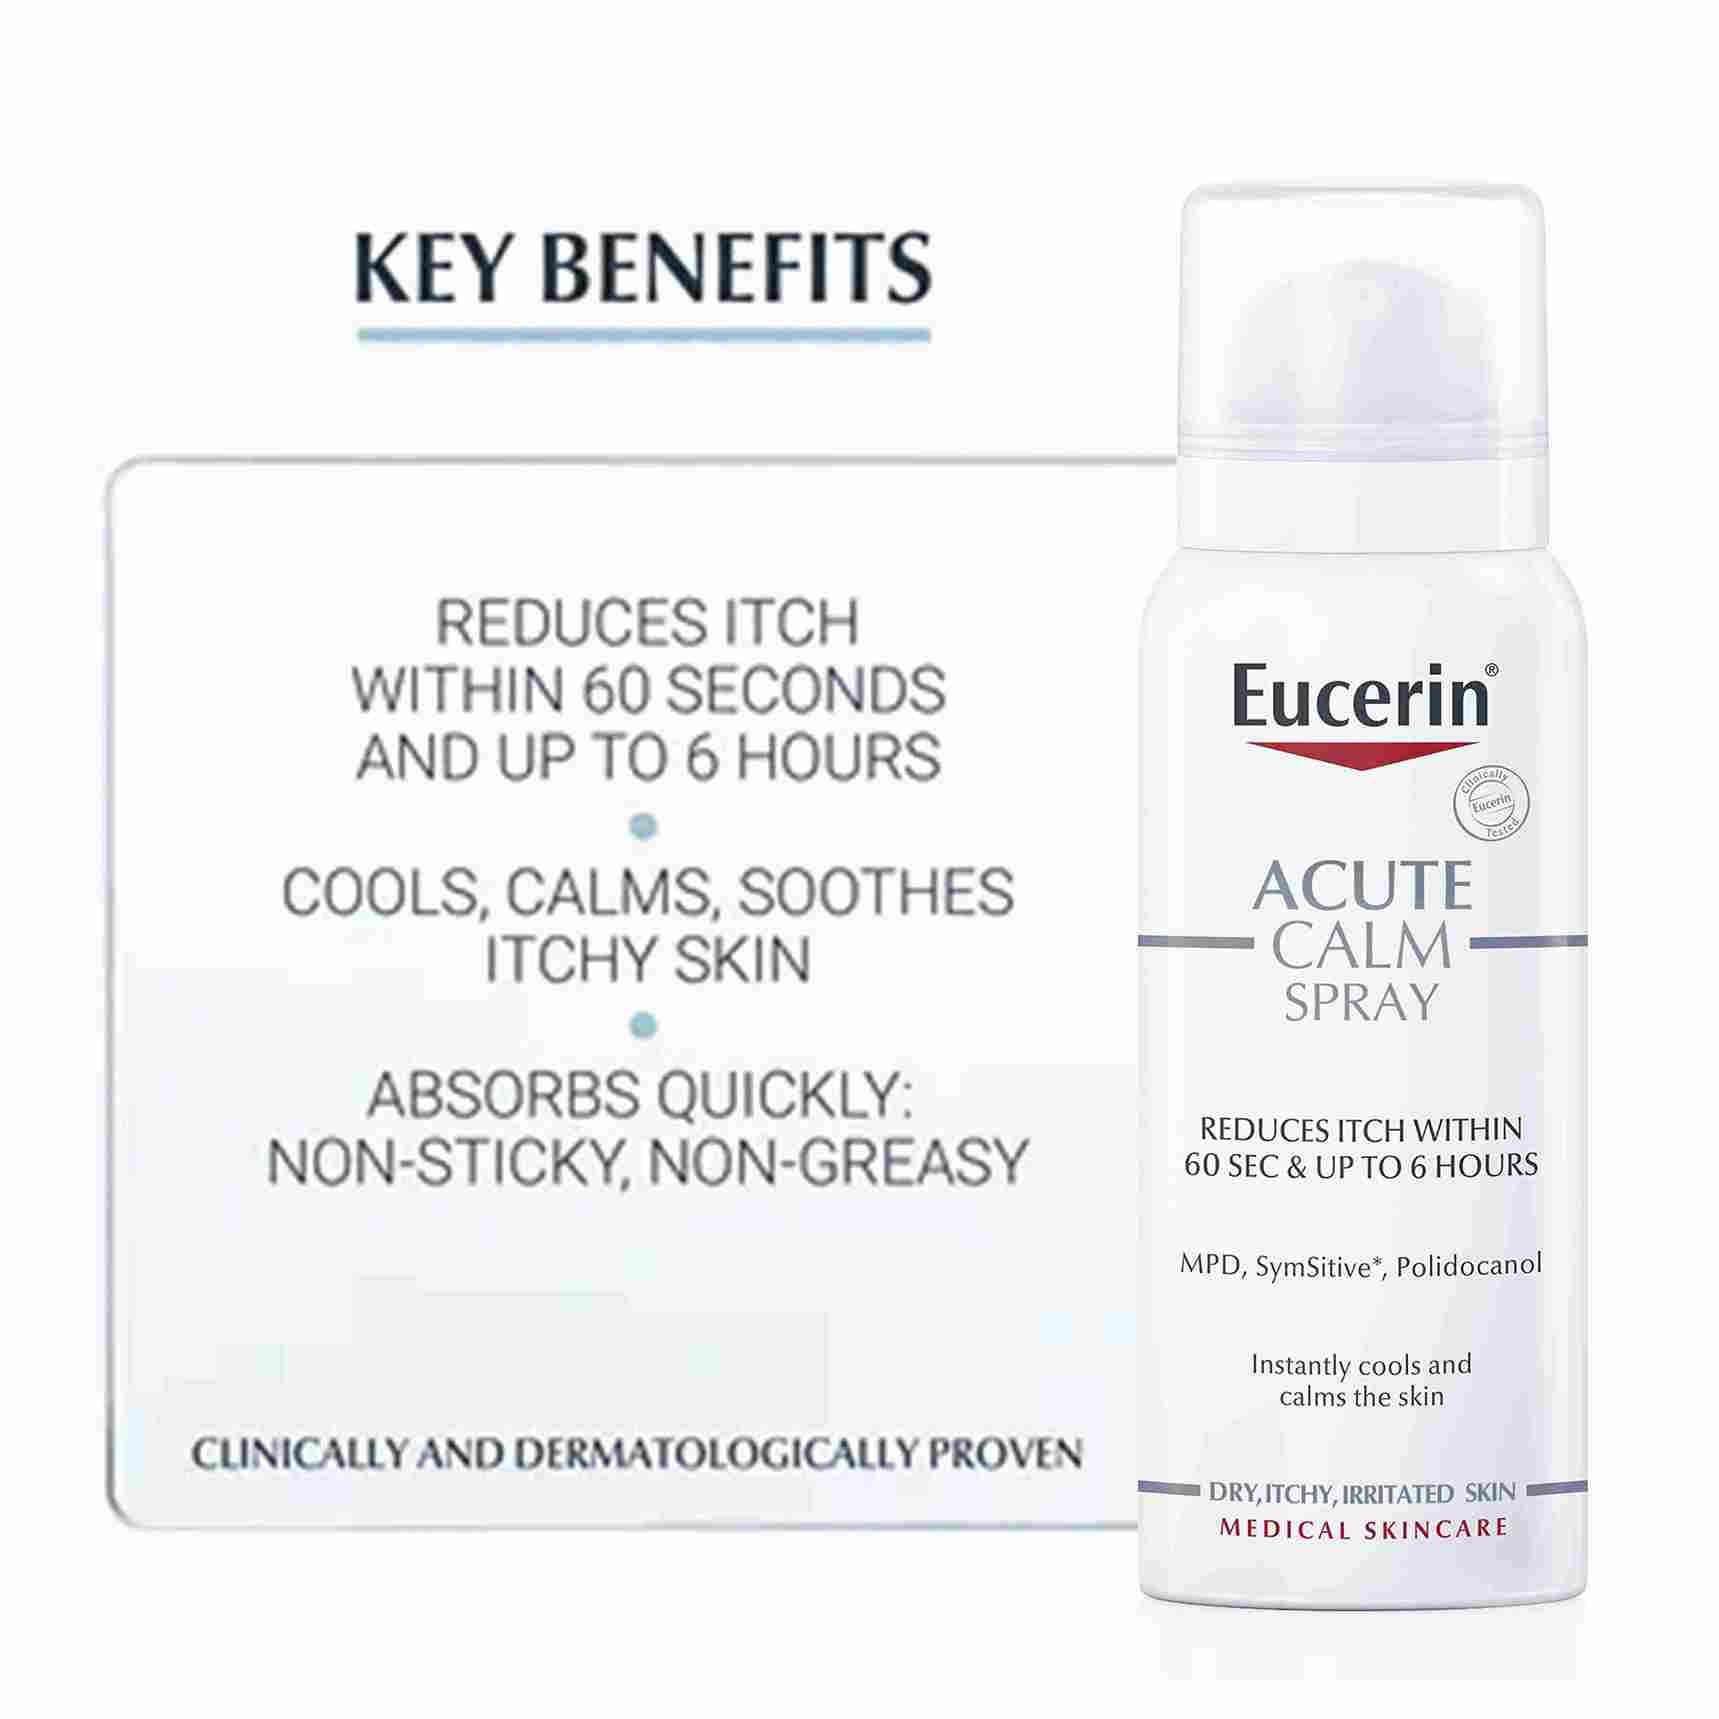 acute calm spray key benefits